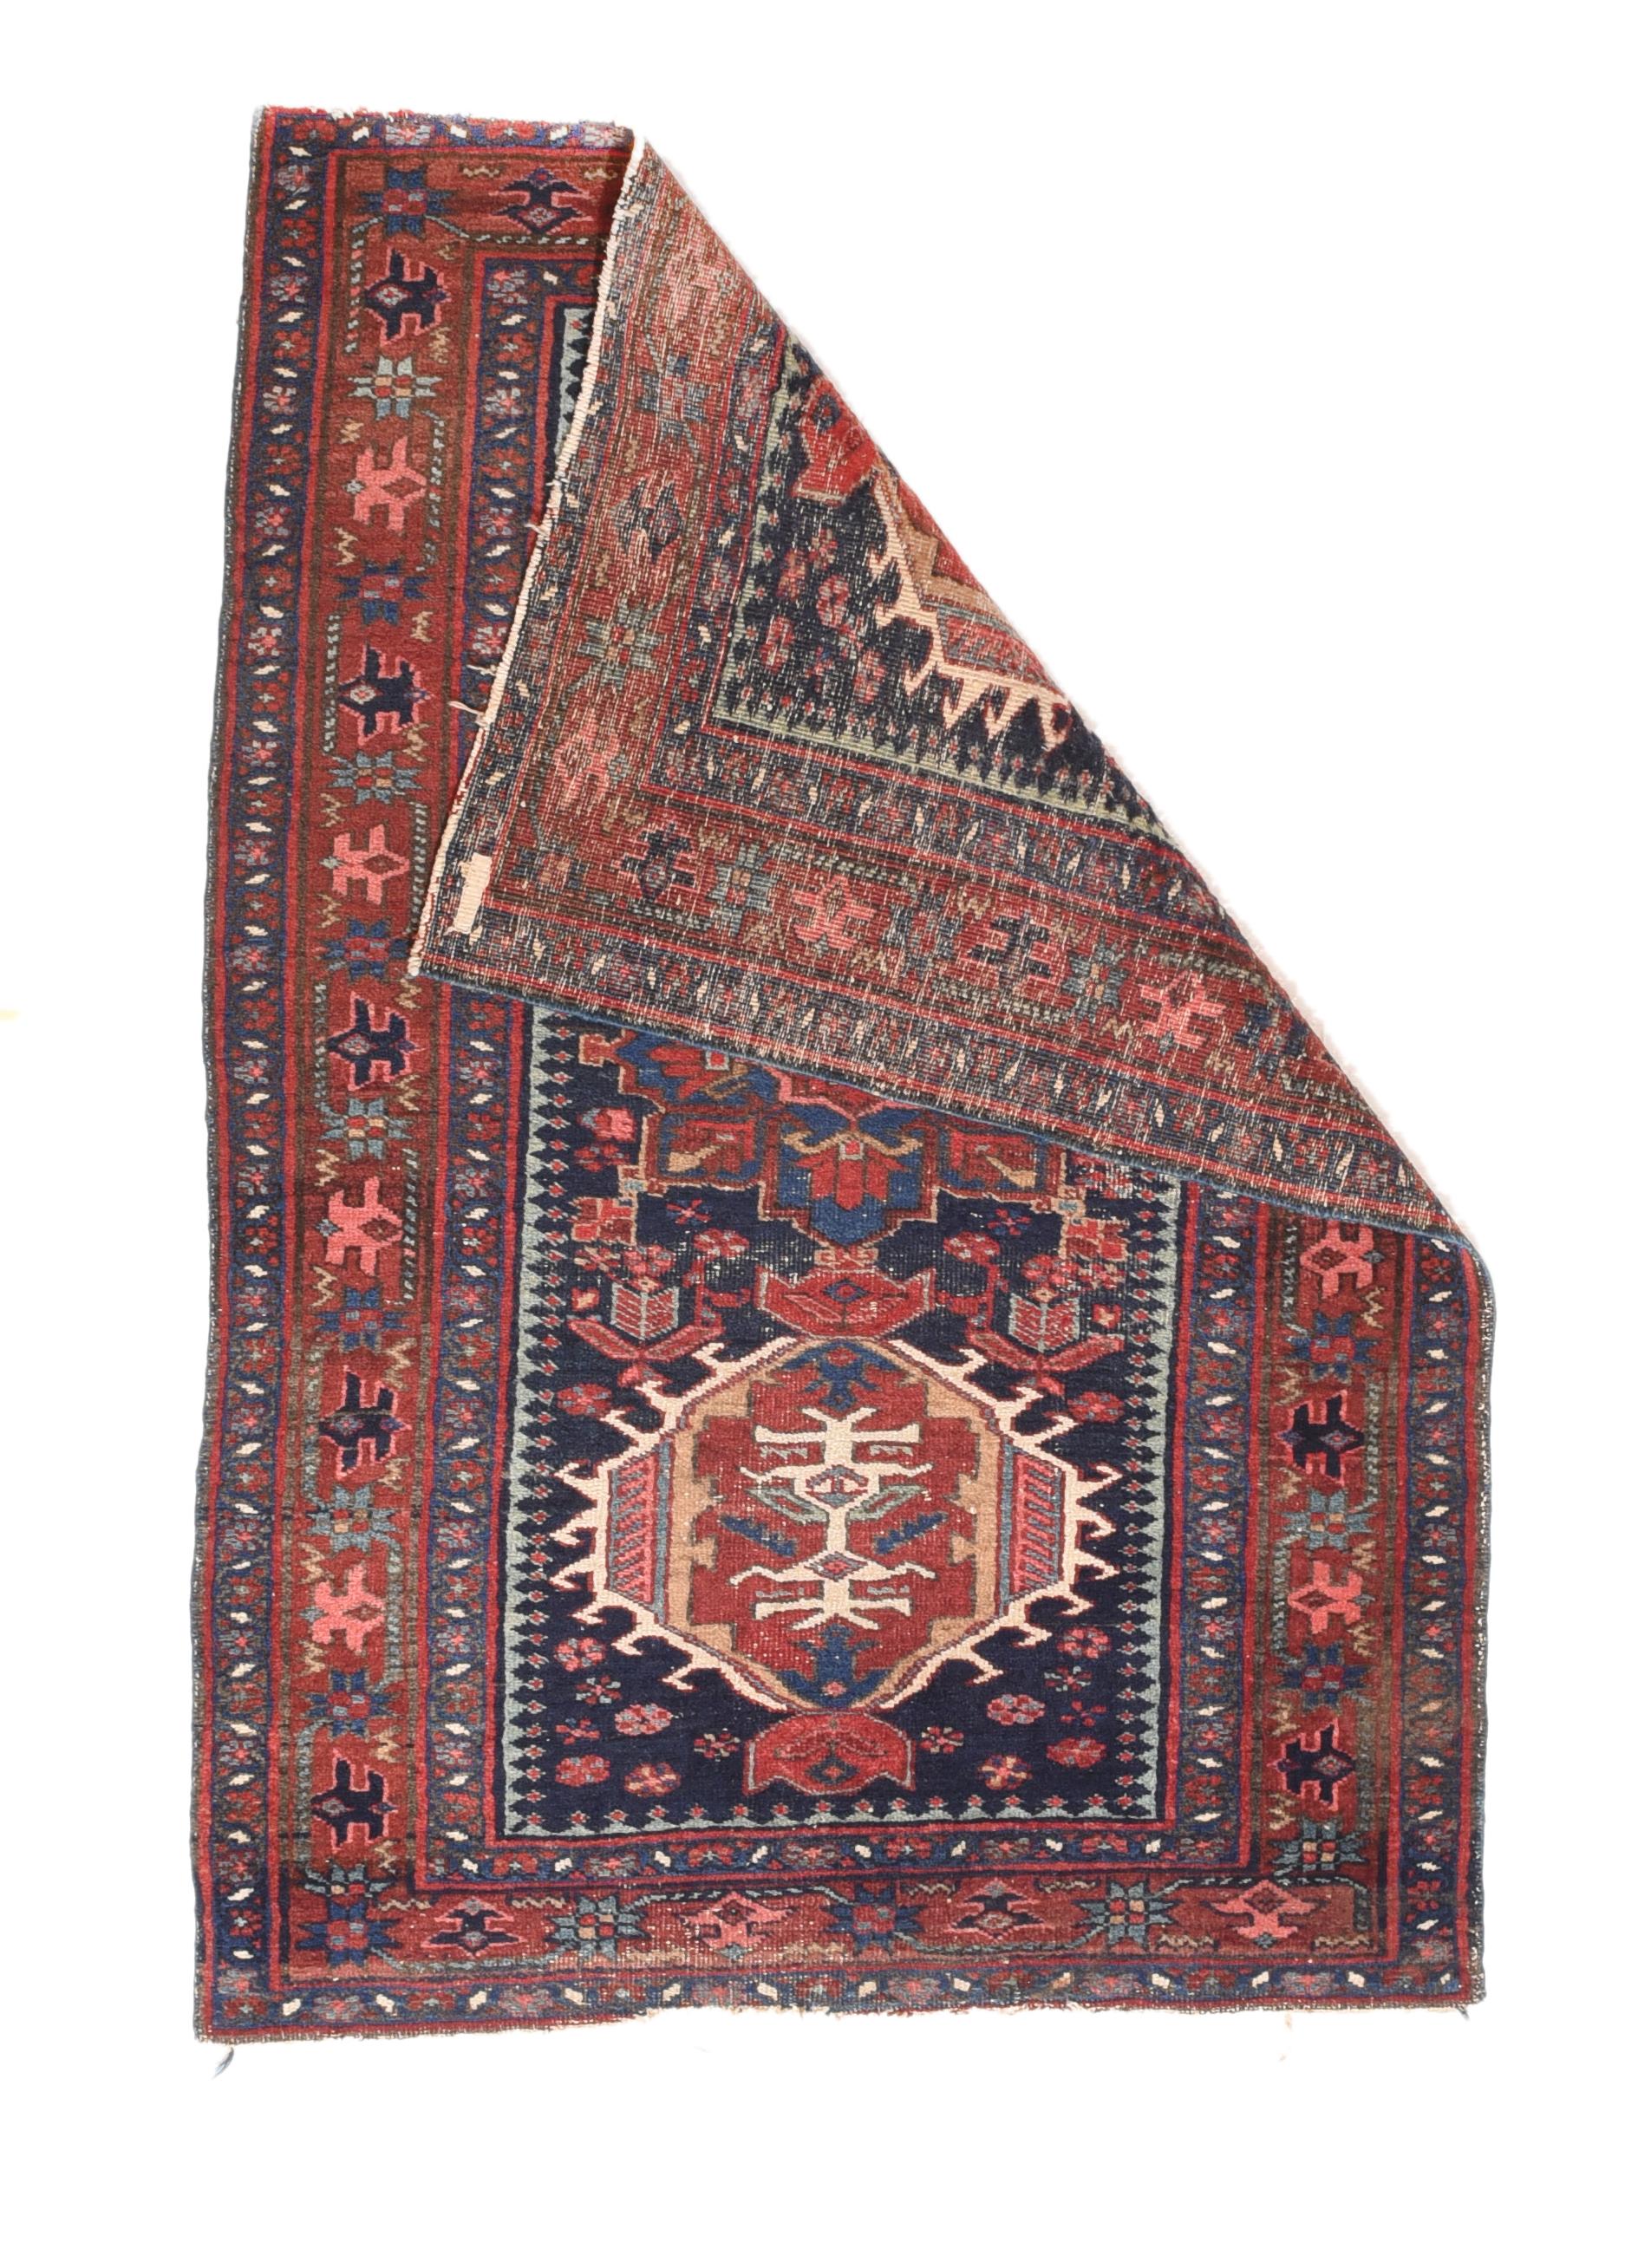 Tribal Fine Antique Karajeh Heriz Persian Rug, Hand Knotted, circa 1910